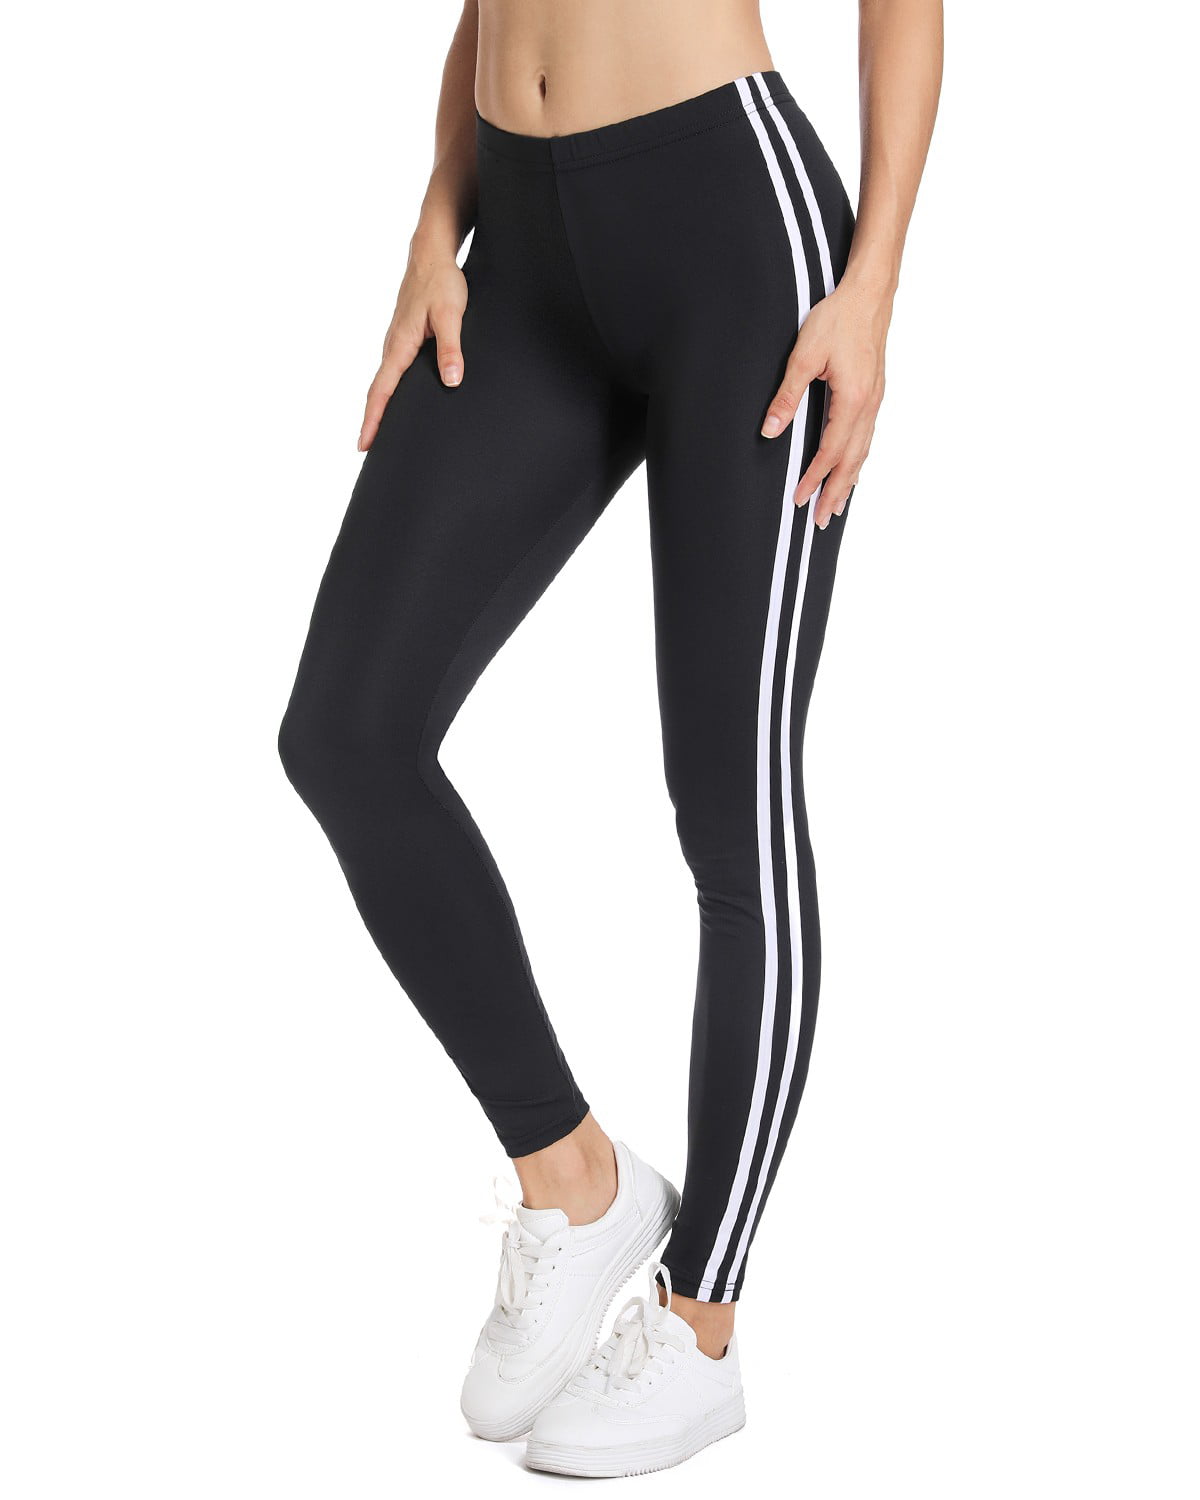  FULLSOFT 3 Pack High Waisted Leggings For Women No  See-Through Tummy Control Yoga Pants Workout Leggings-Reg&Plus Size